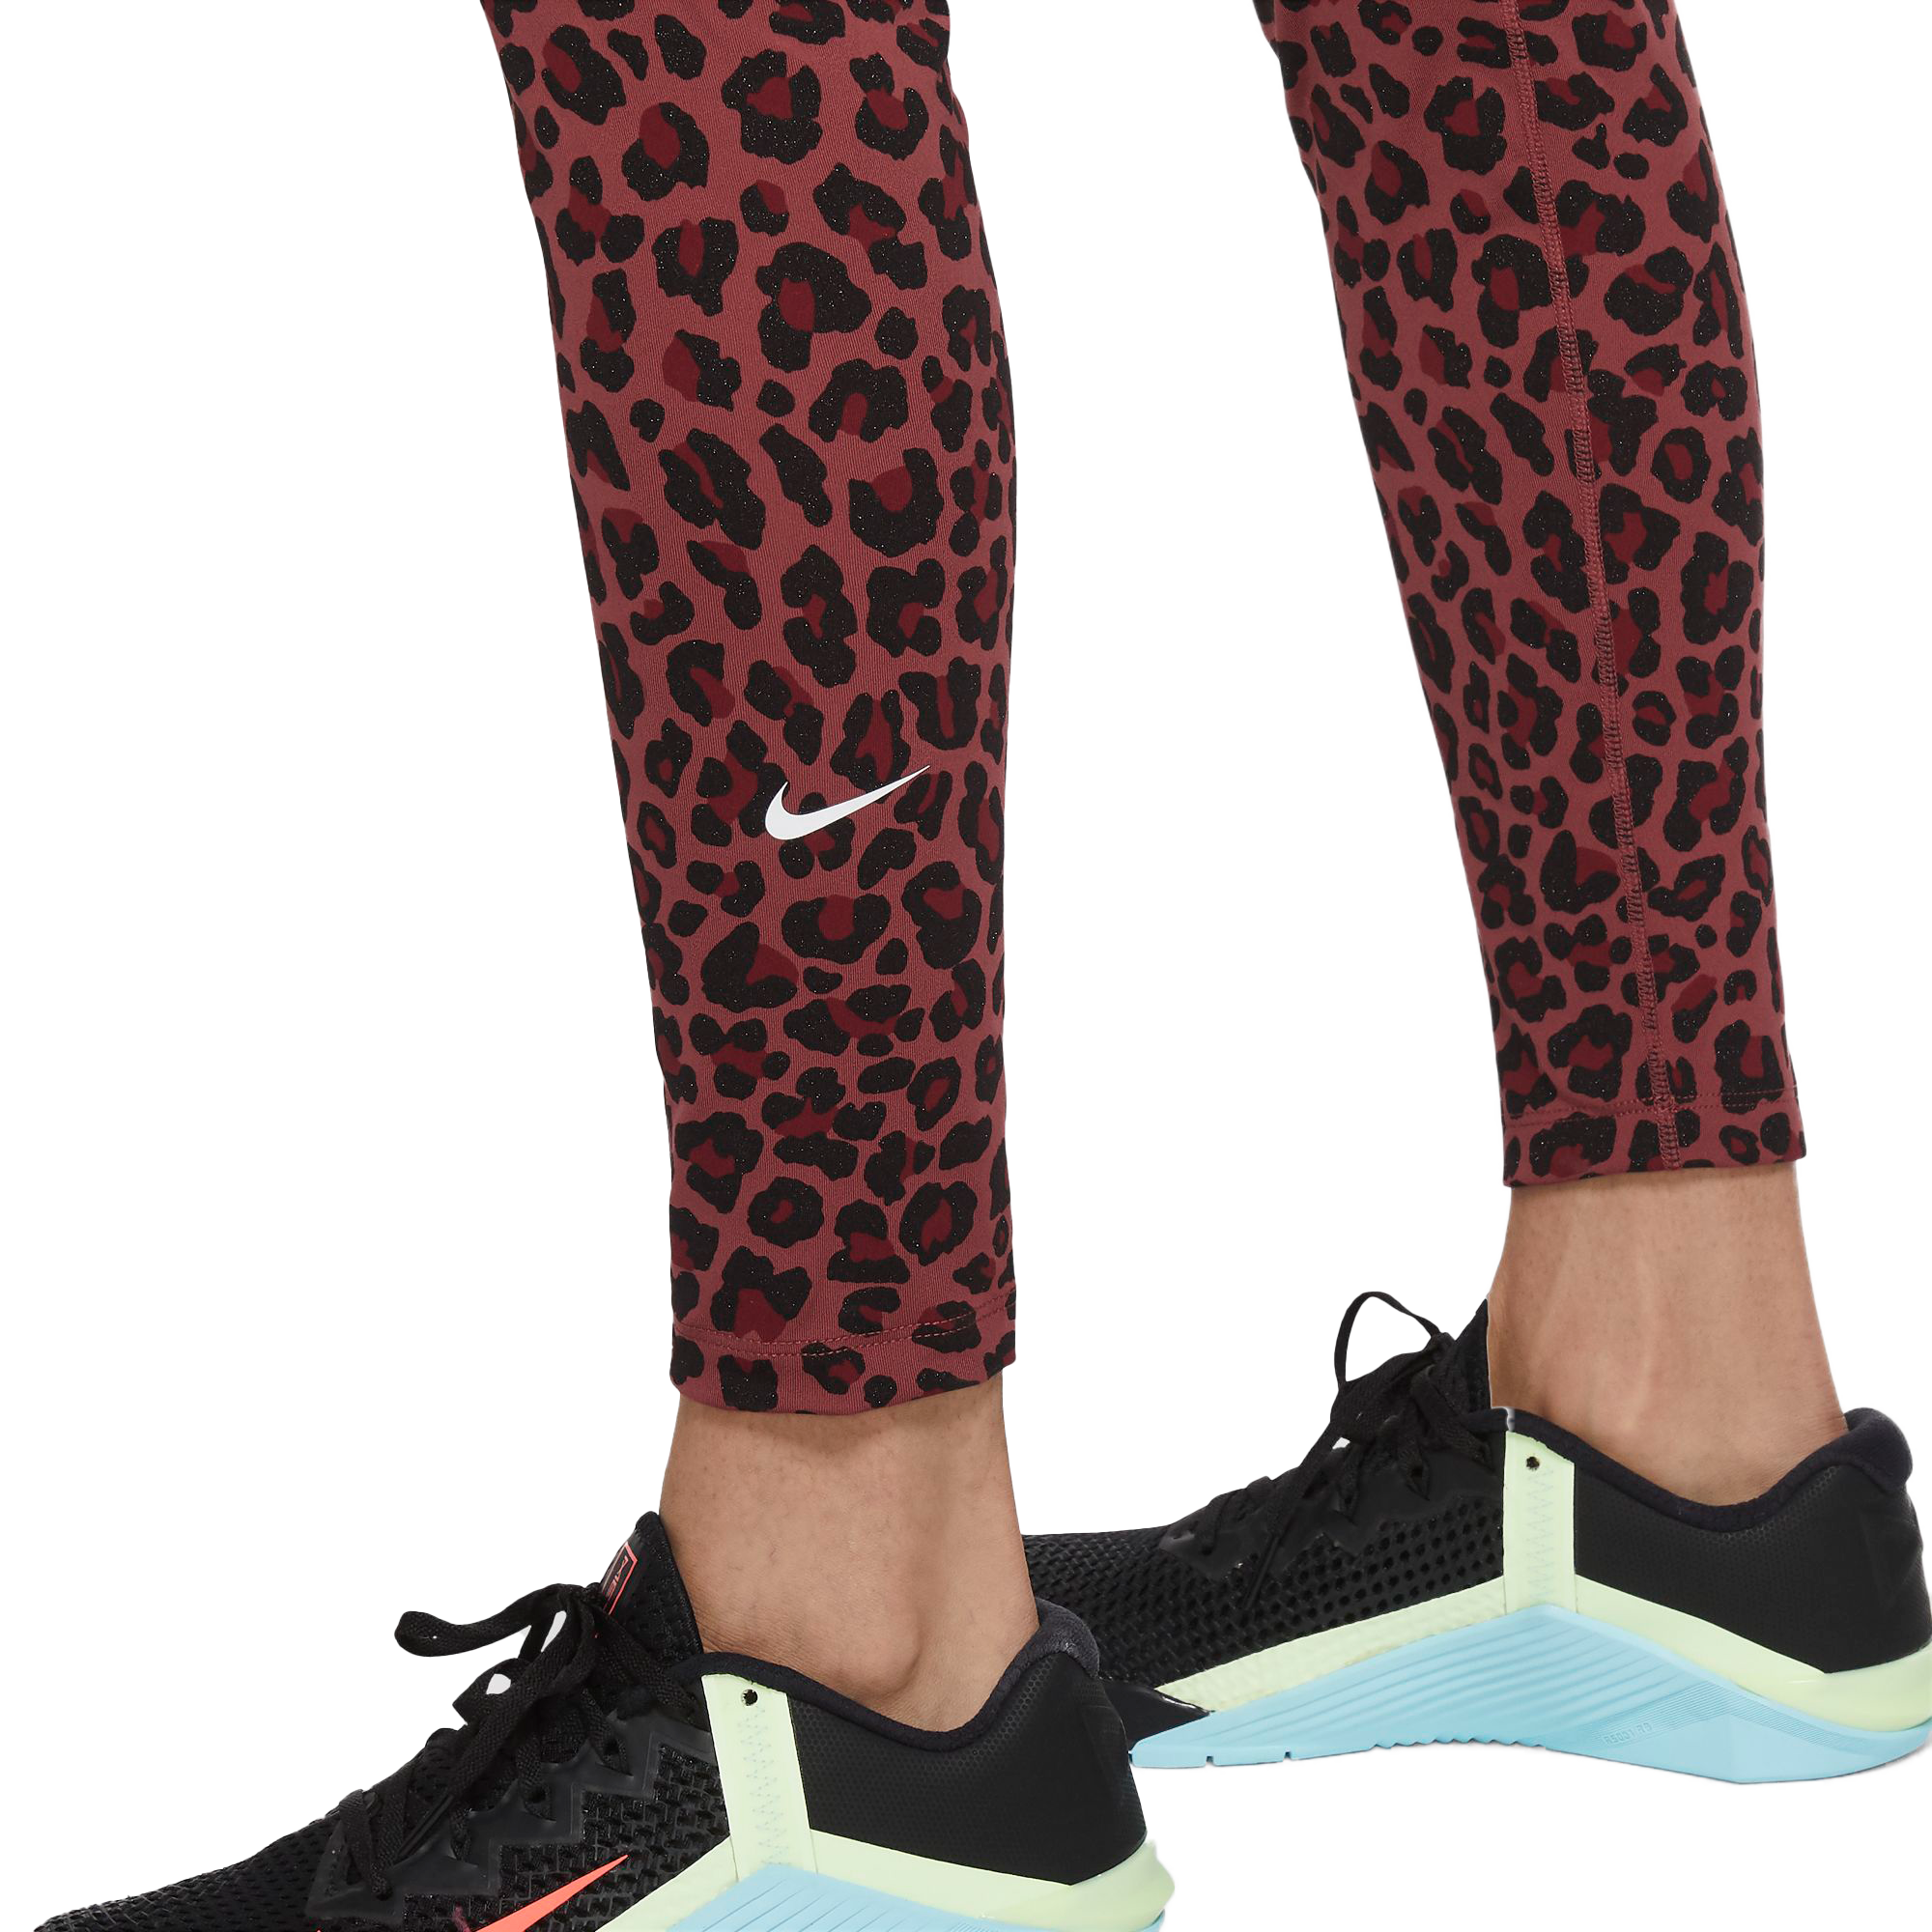 NWT Nike Racer Leopard Legging S Pink Black Capri Pant Compression